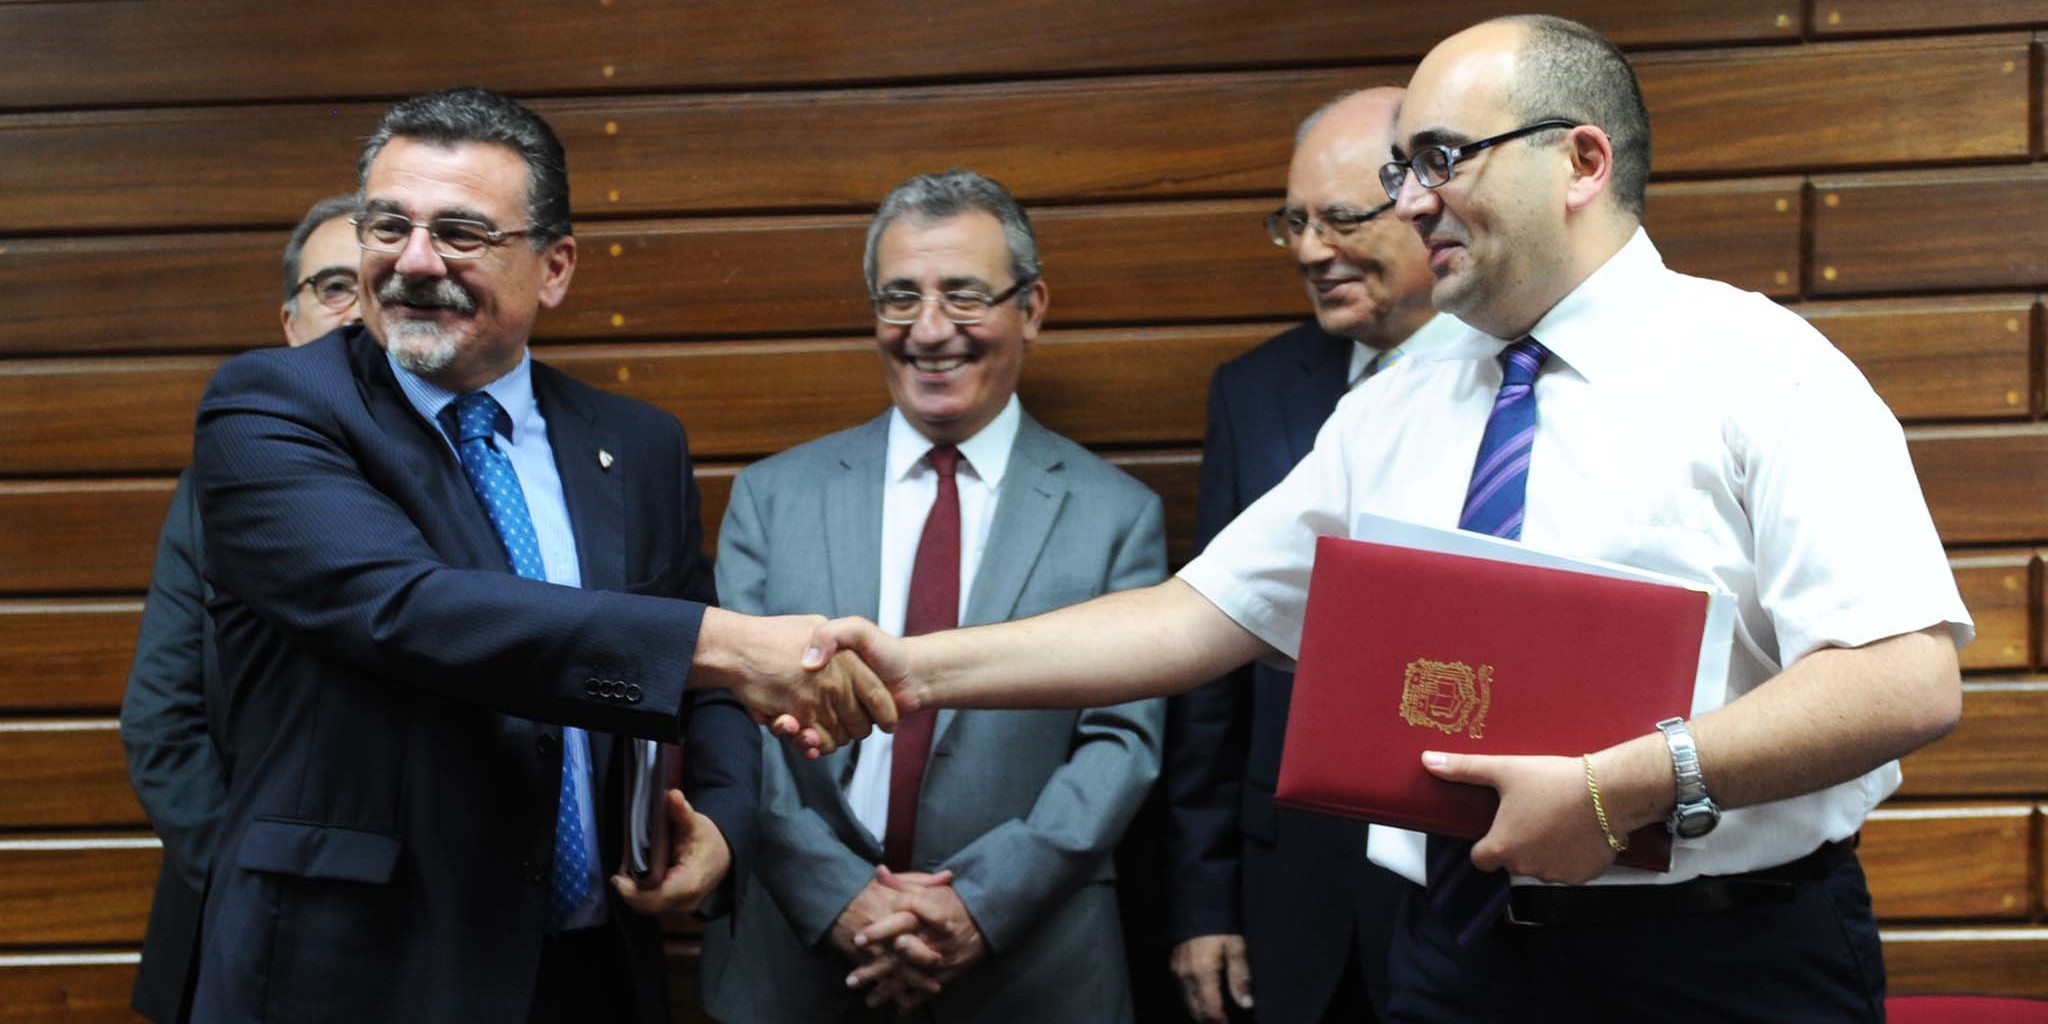 Signing of University Agreement